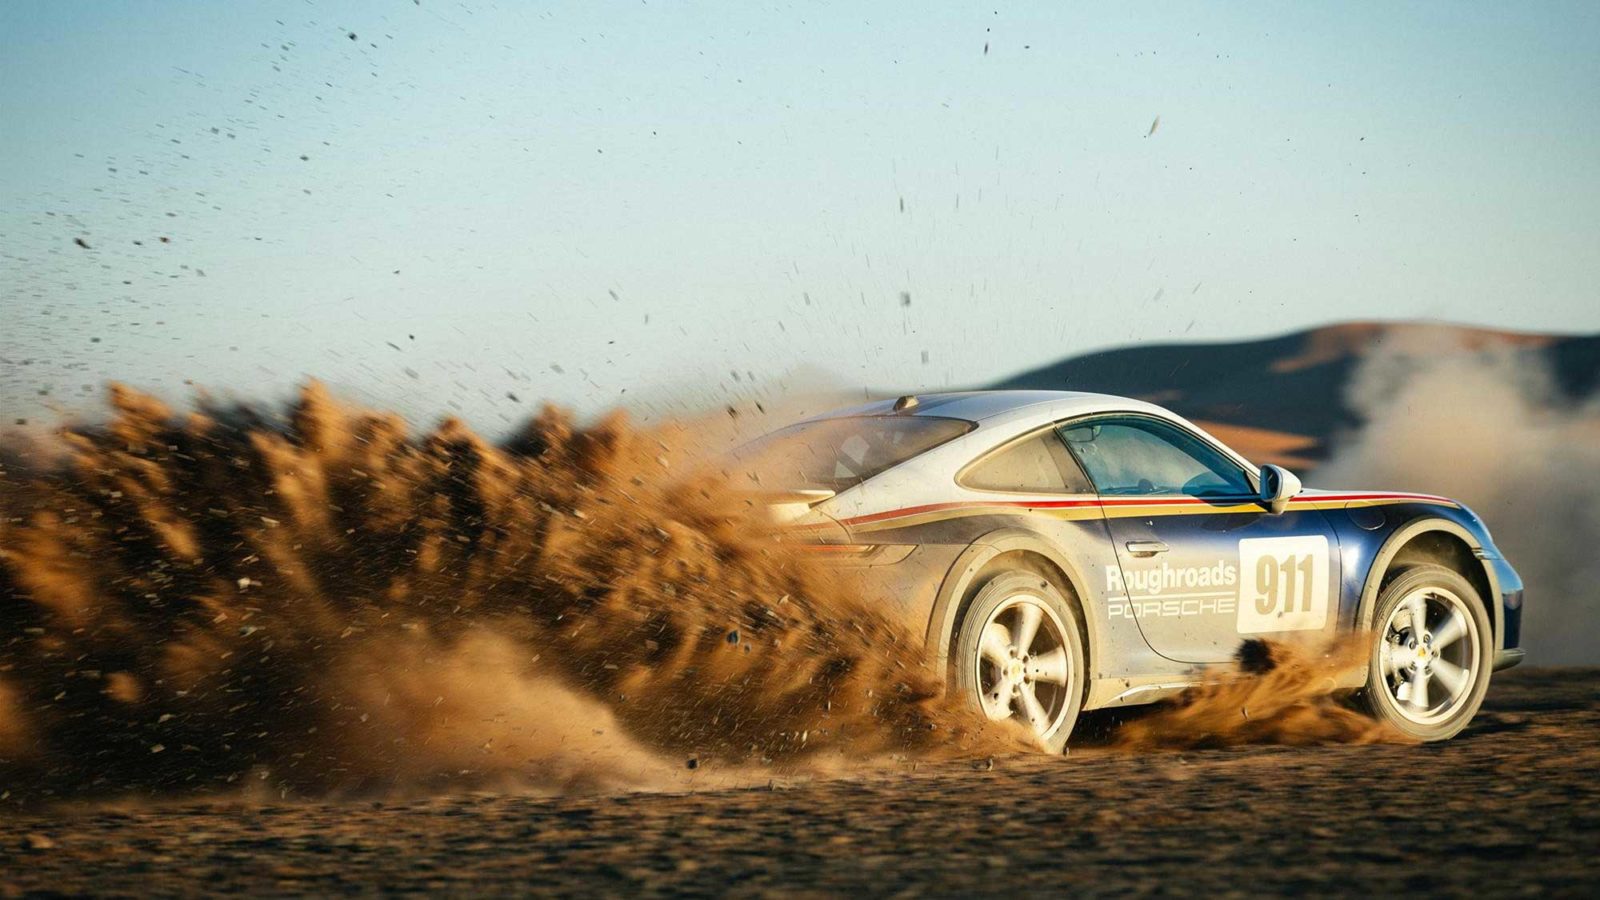 Porsche 911 kicking up dust in Dakar